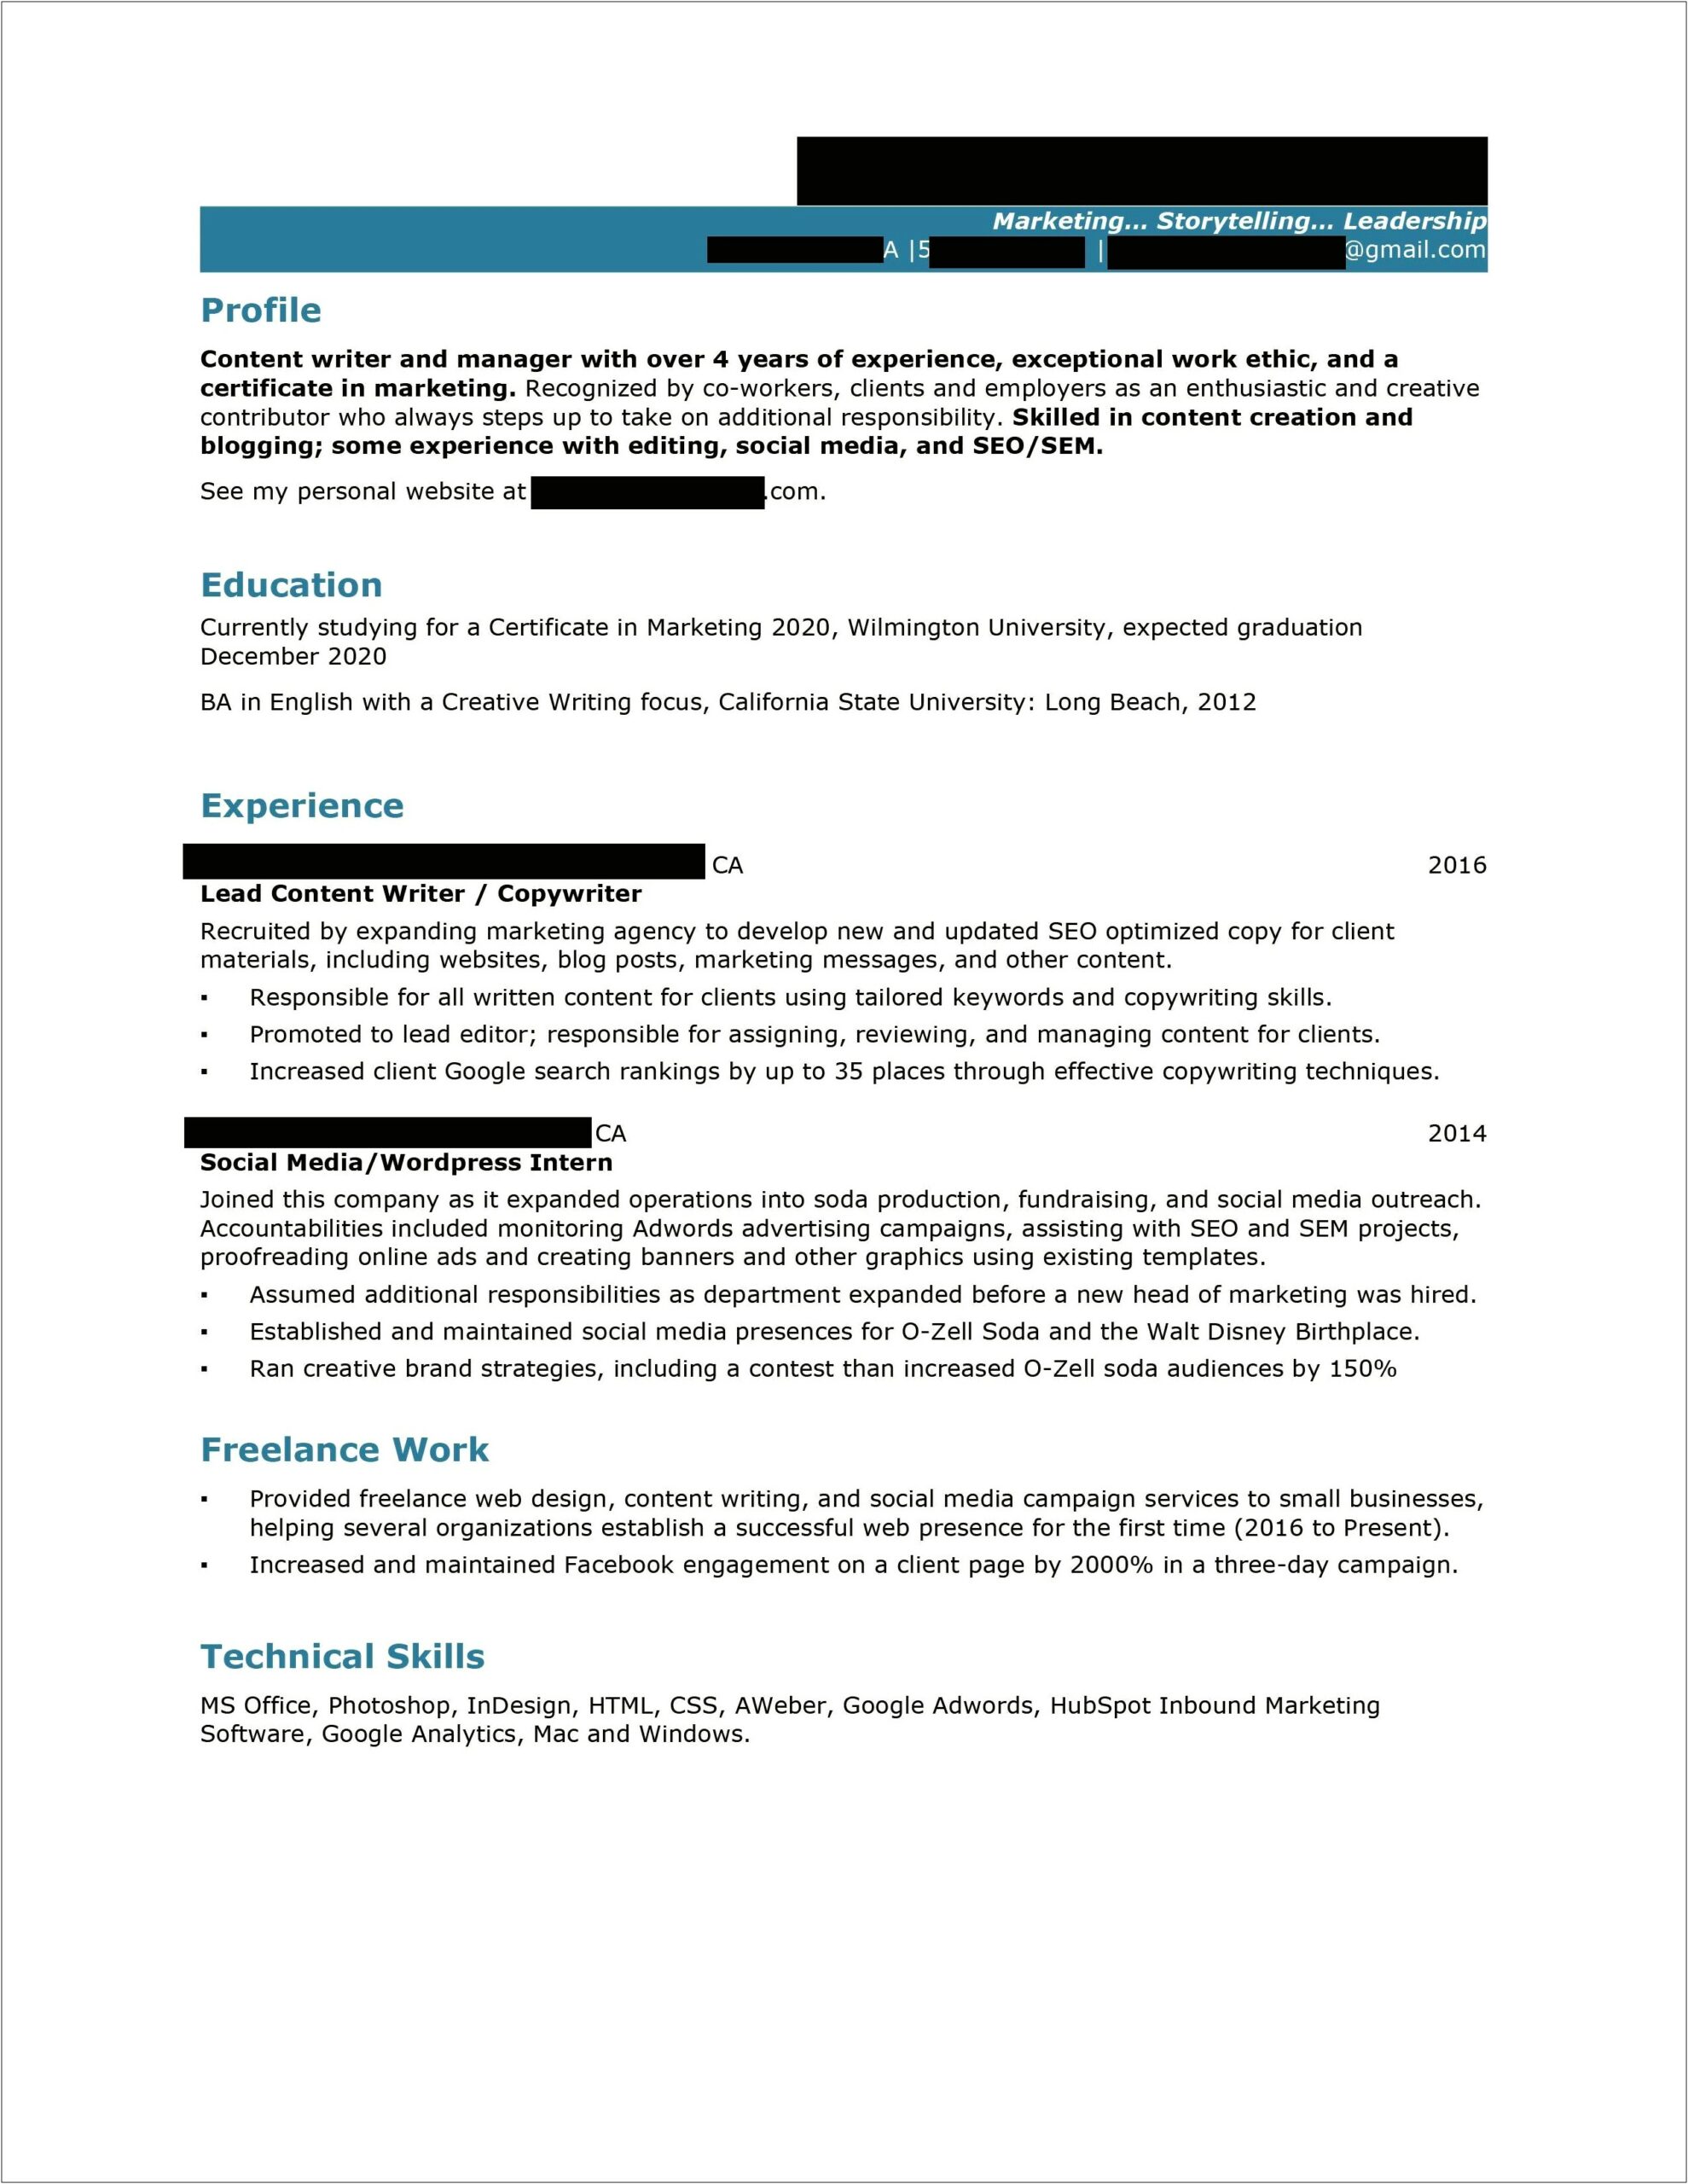 Theme Park Worker And Job Description For Resume